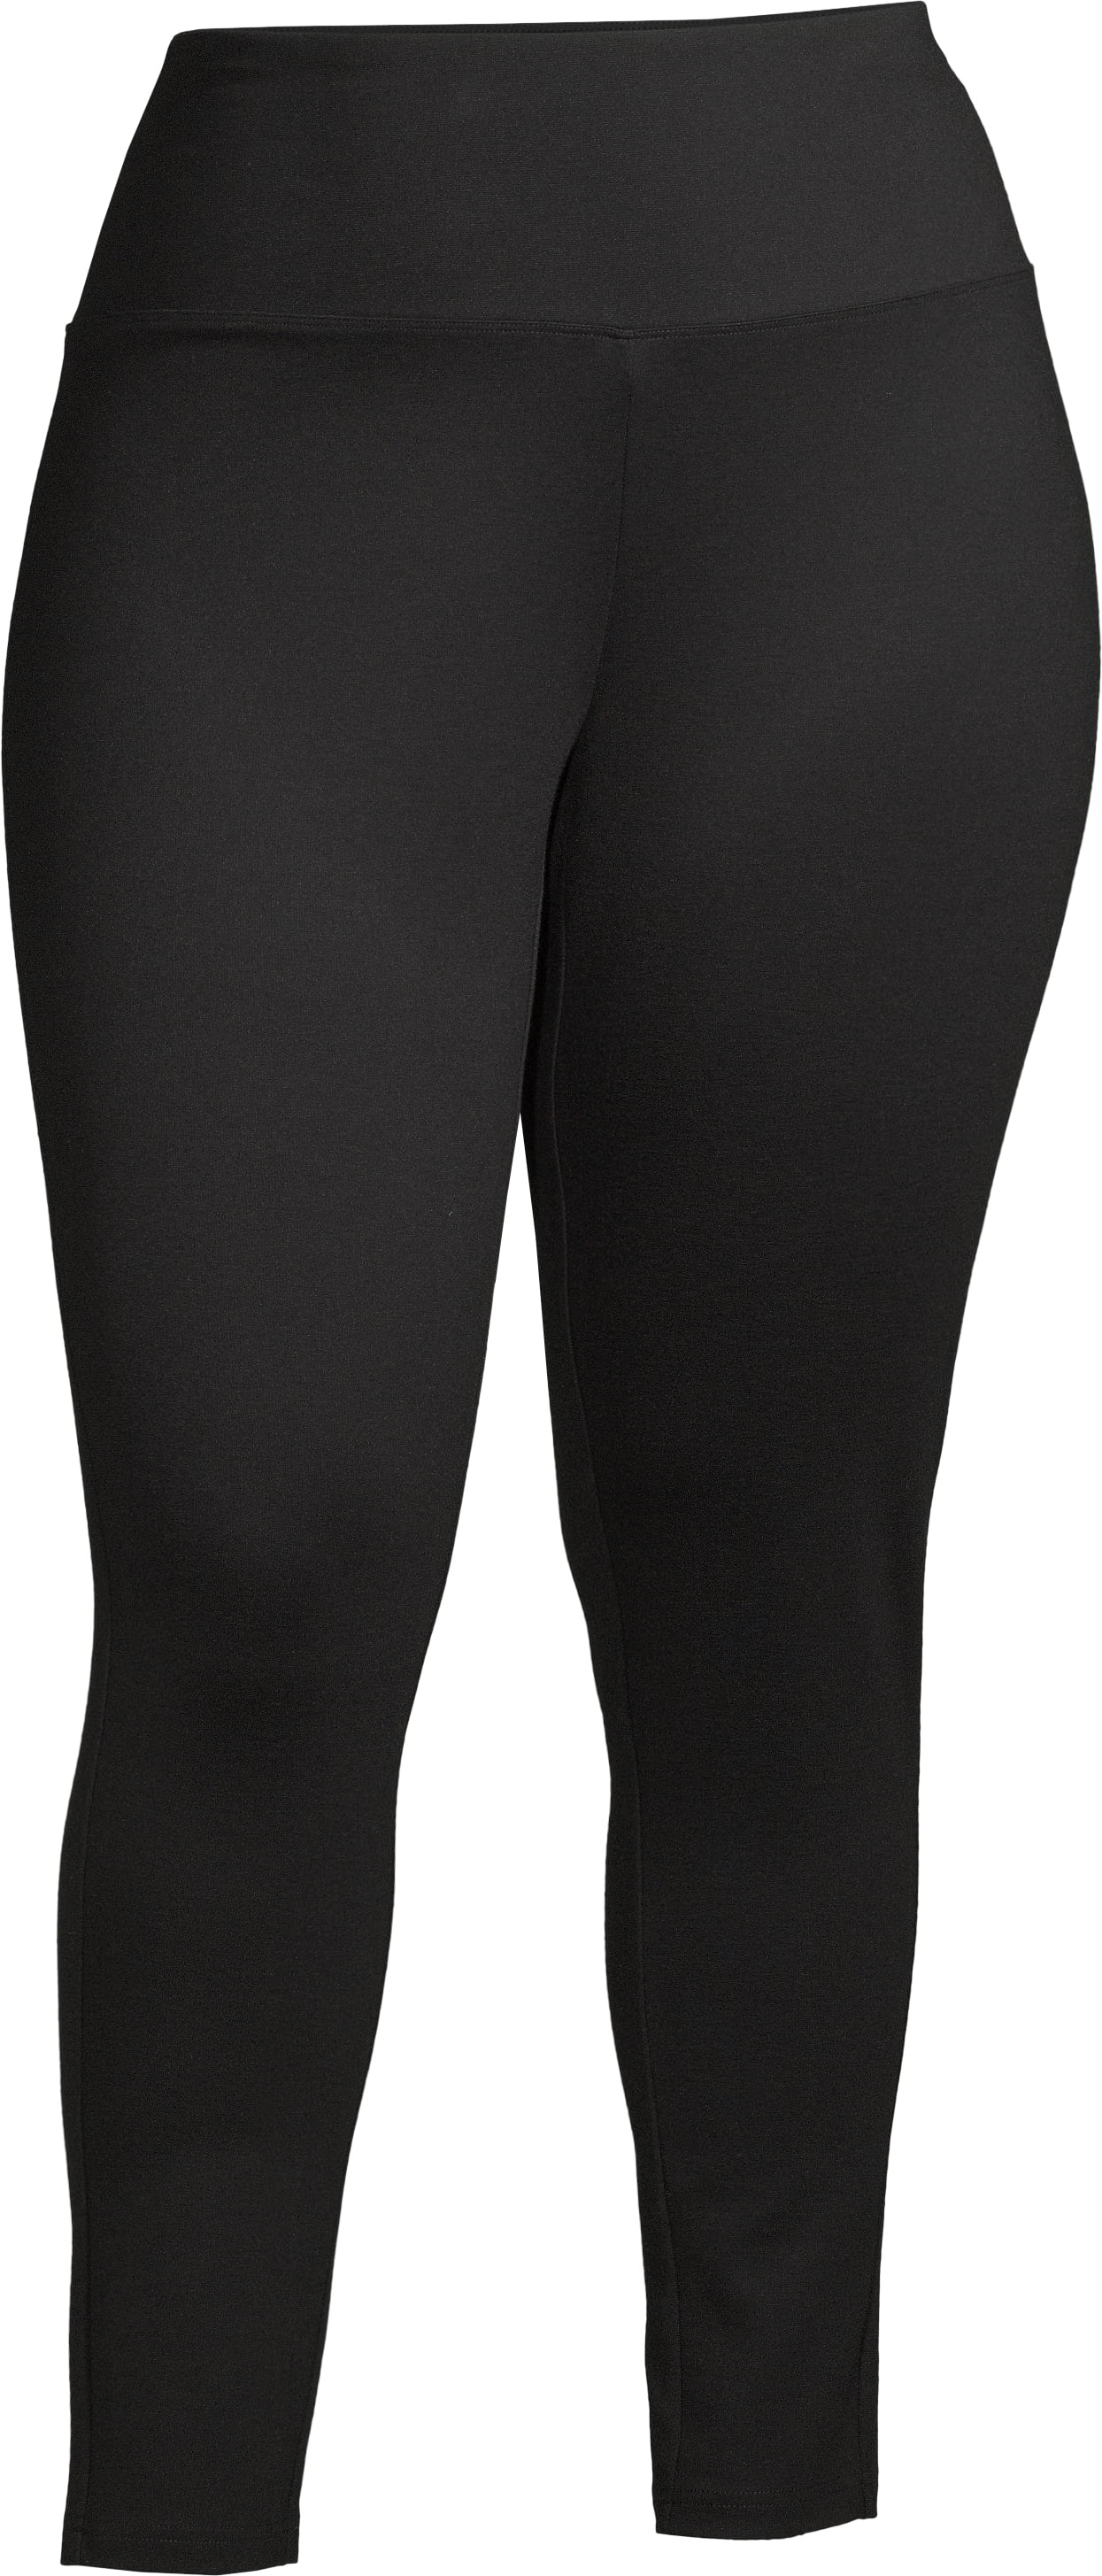  yeuG Plus Size Leggings for Women-Stretchy X-Large-4X Tummy  Control High Waist Spandex Workout Black Yoga Pants(Black,Black(Long Length ),XX-Large) : Clothing, Shoes & Jewelry